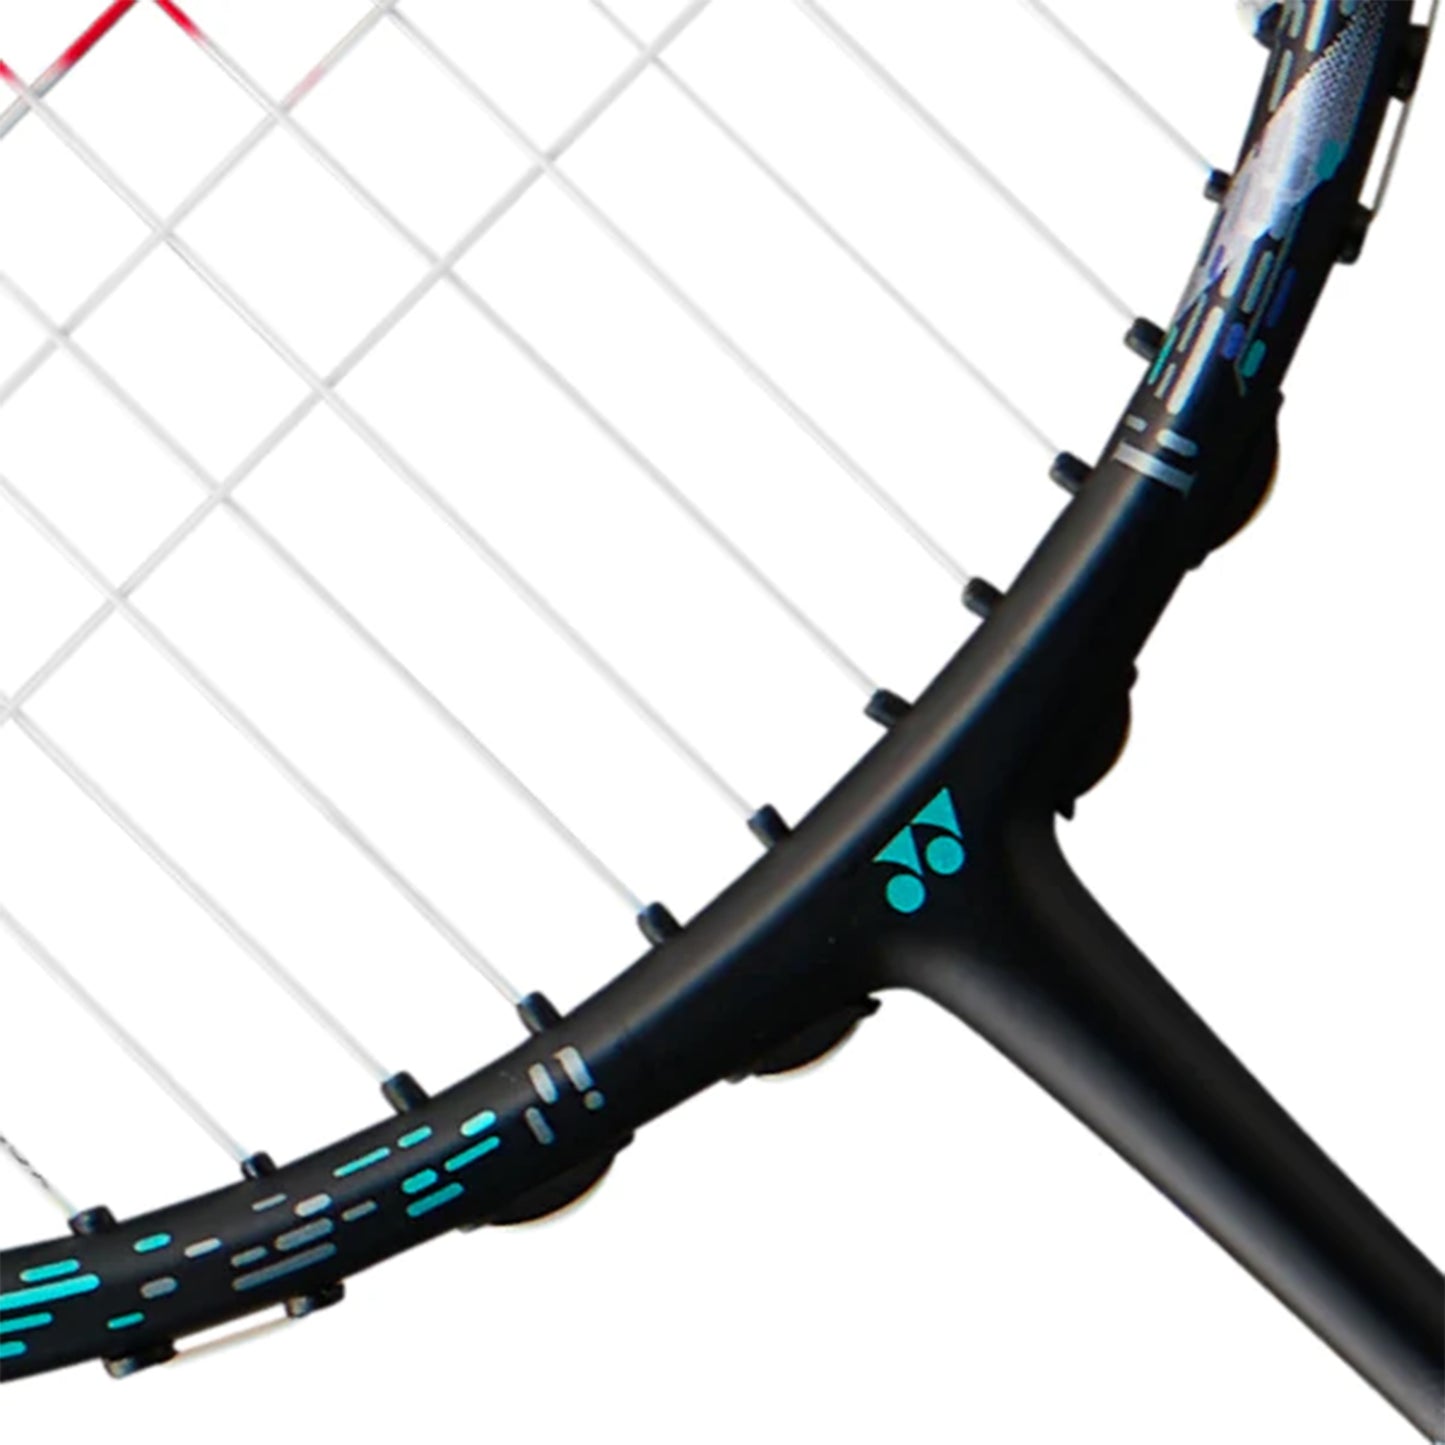 Yonex Astrox 88 PLAY Strung Badminton Racquet, 4U5- Black/Silver - Best Price online Prokicksports.com